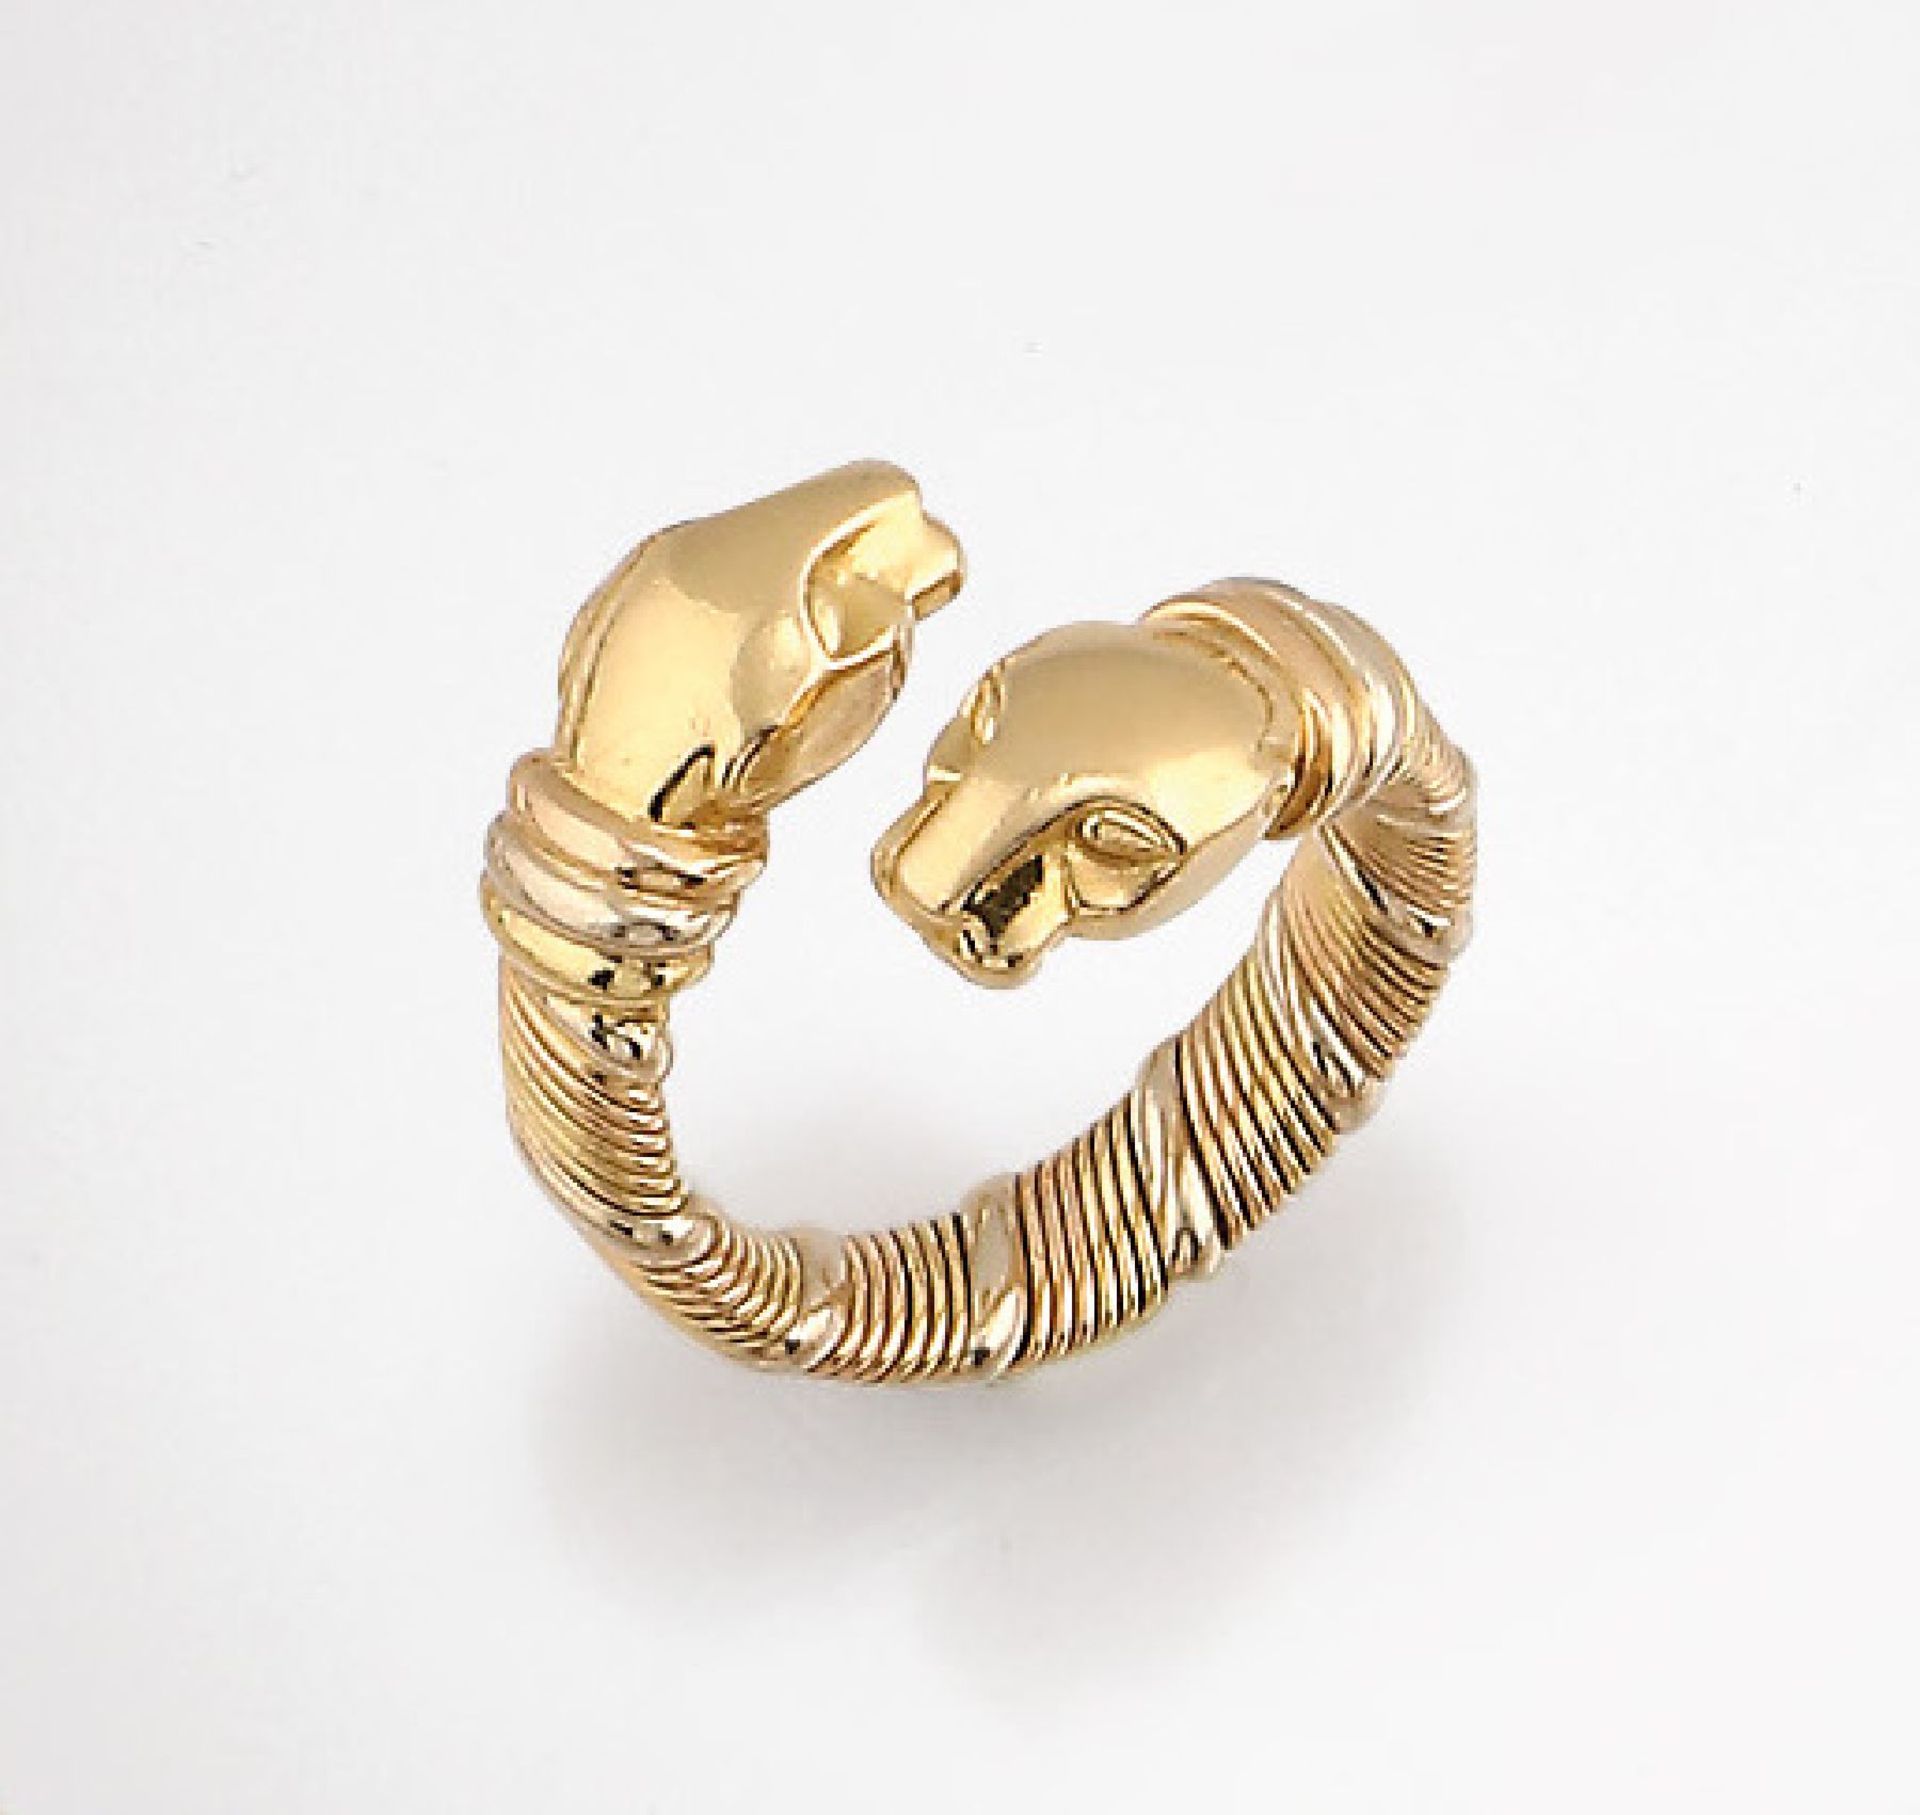 18 kt Gold CARTIER Ring "Panther", GG/WG/RG 750/000, Pantherköpfe, flexibel, sign. und num., RW